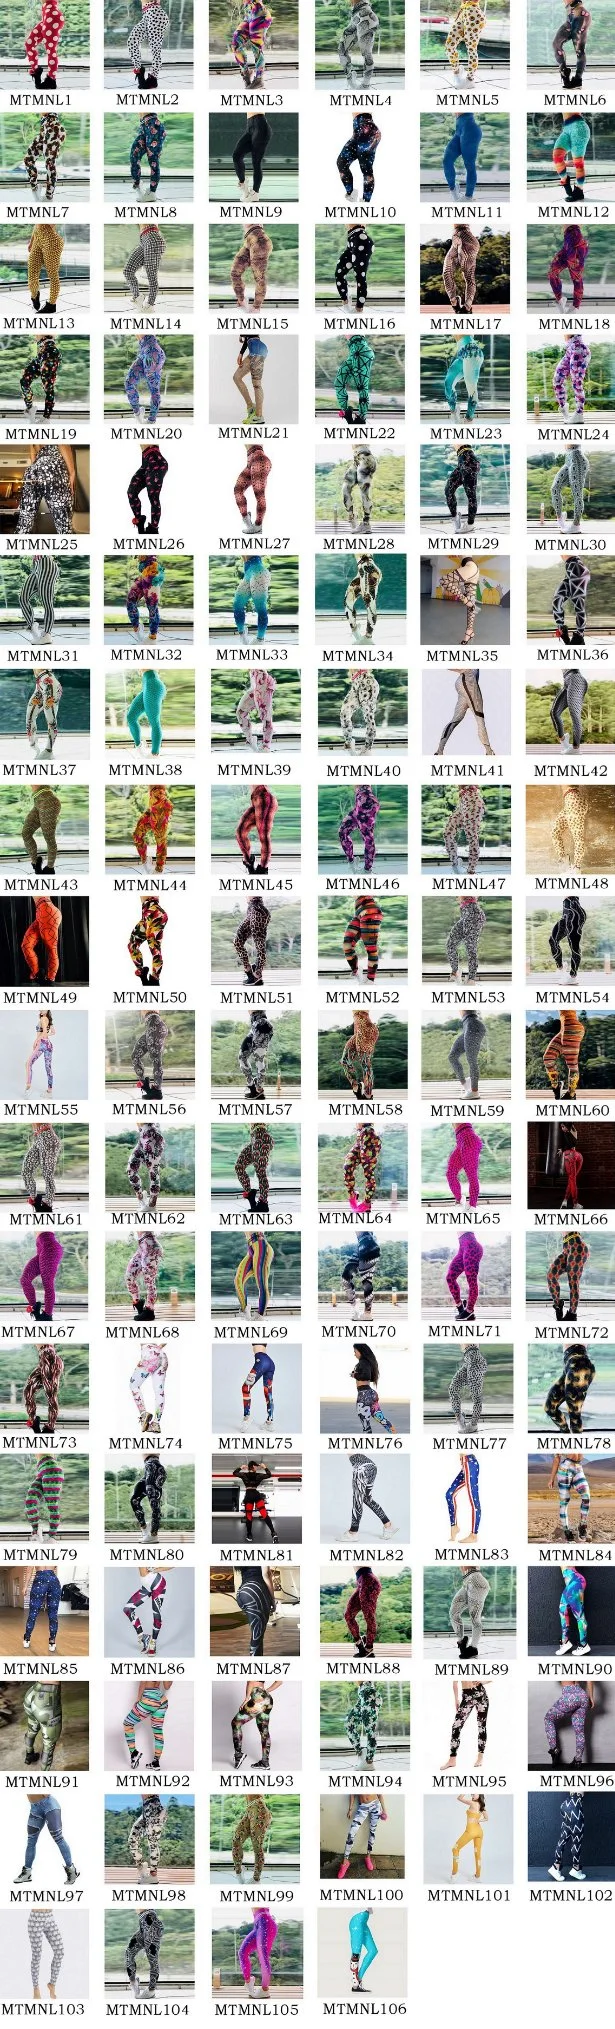 Purple Camouflage Yoga Pants Sports Leggings Tight Fitness Pants Yoga Clothes Women